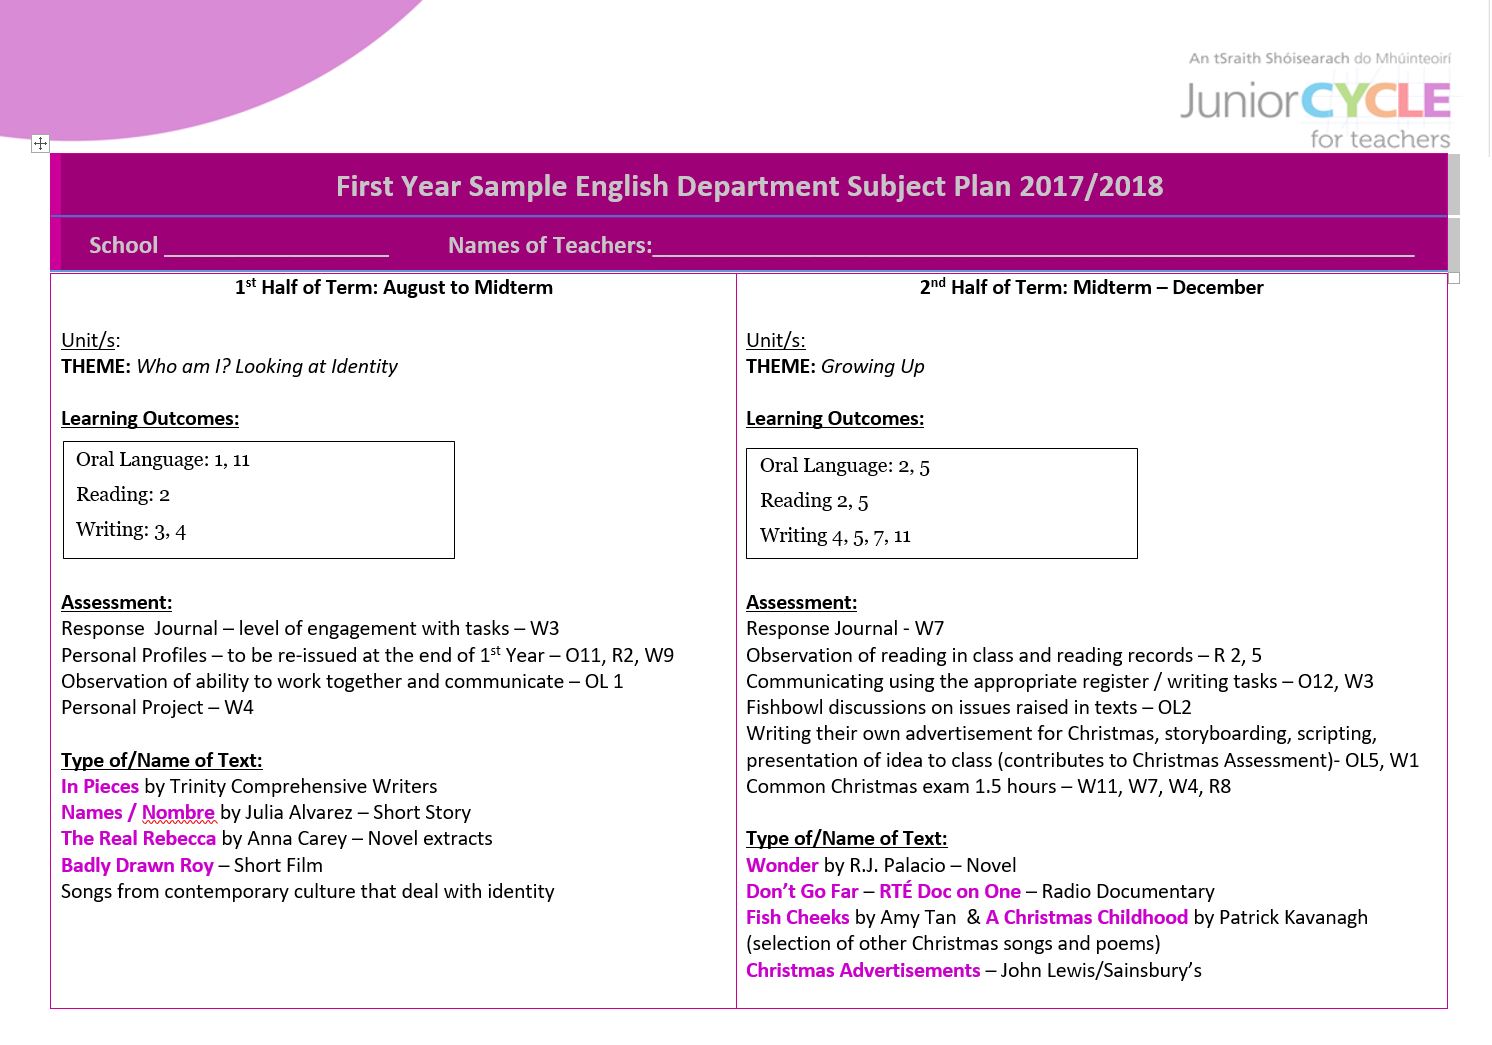 First Year Sample English Department Subject Plan 2016/2017